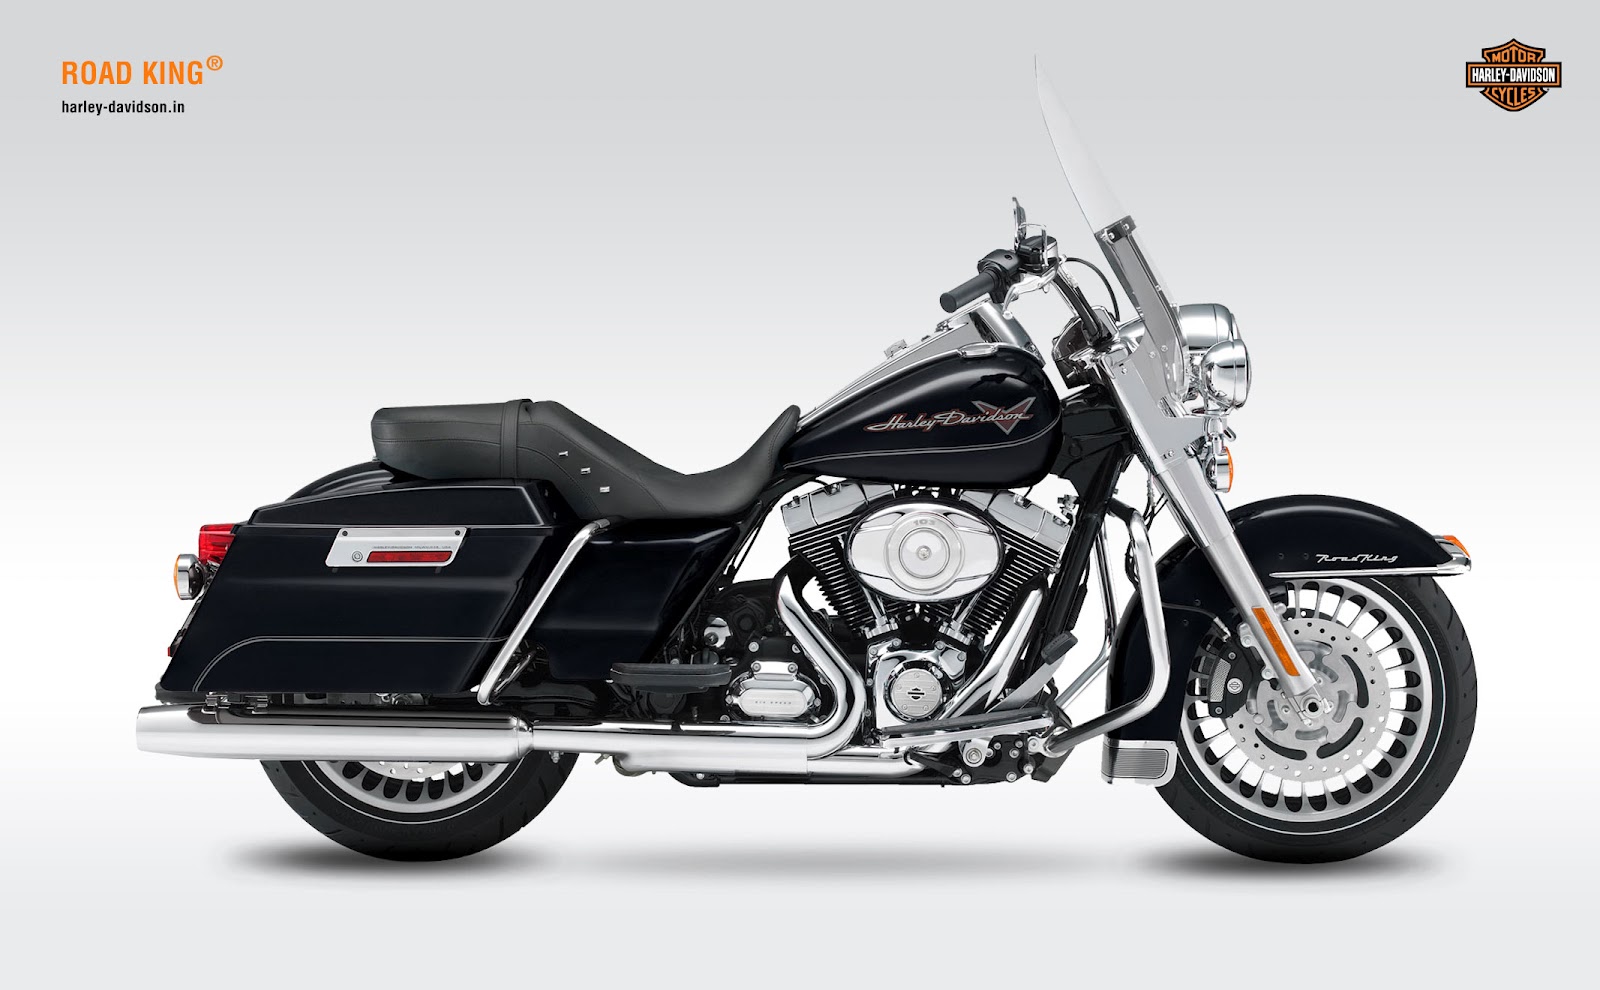 Harley Davidson Different Bike Models 2012 ~ MyClipta